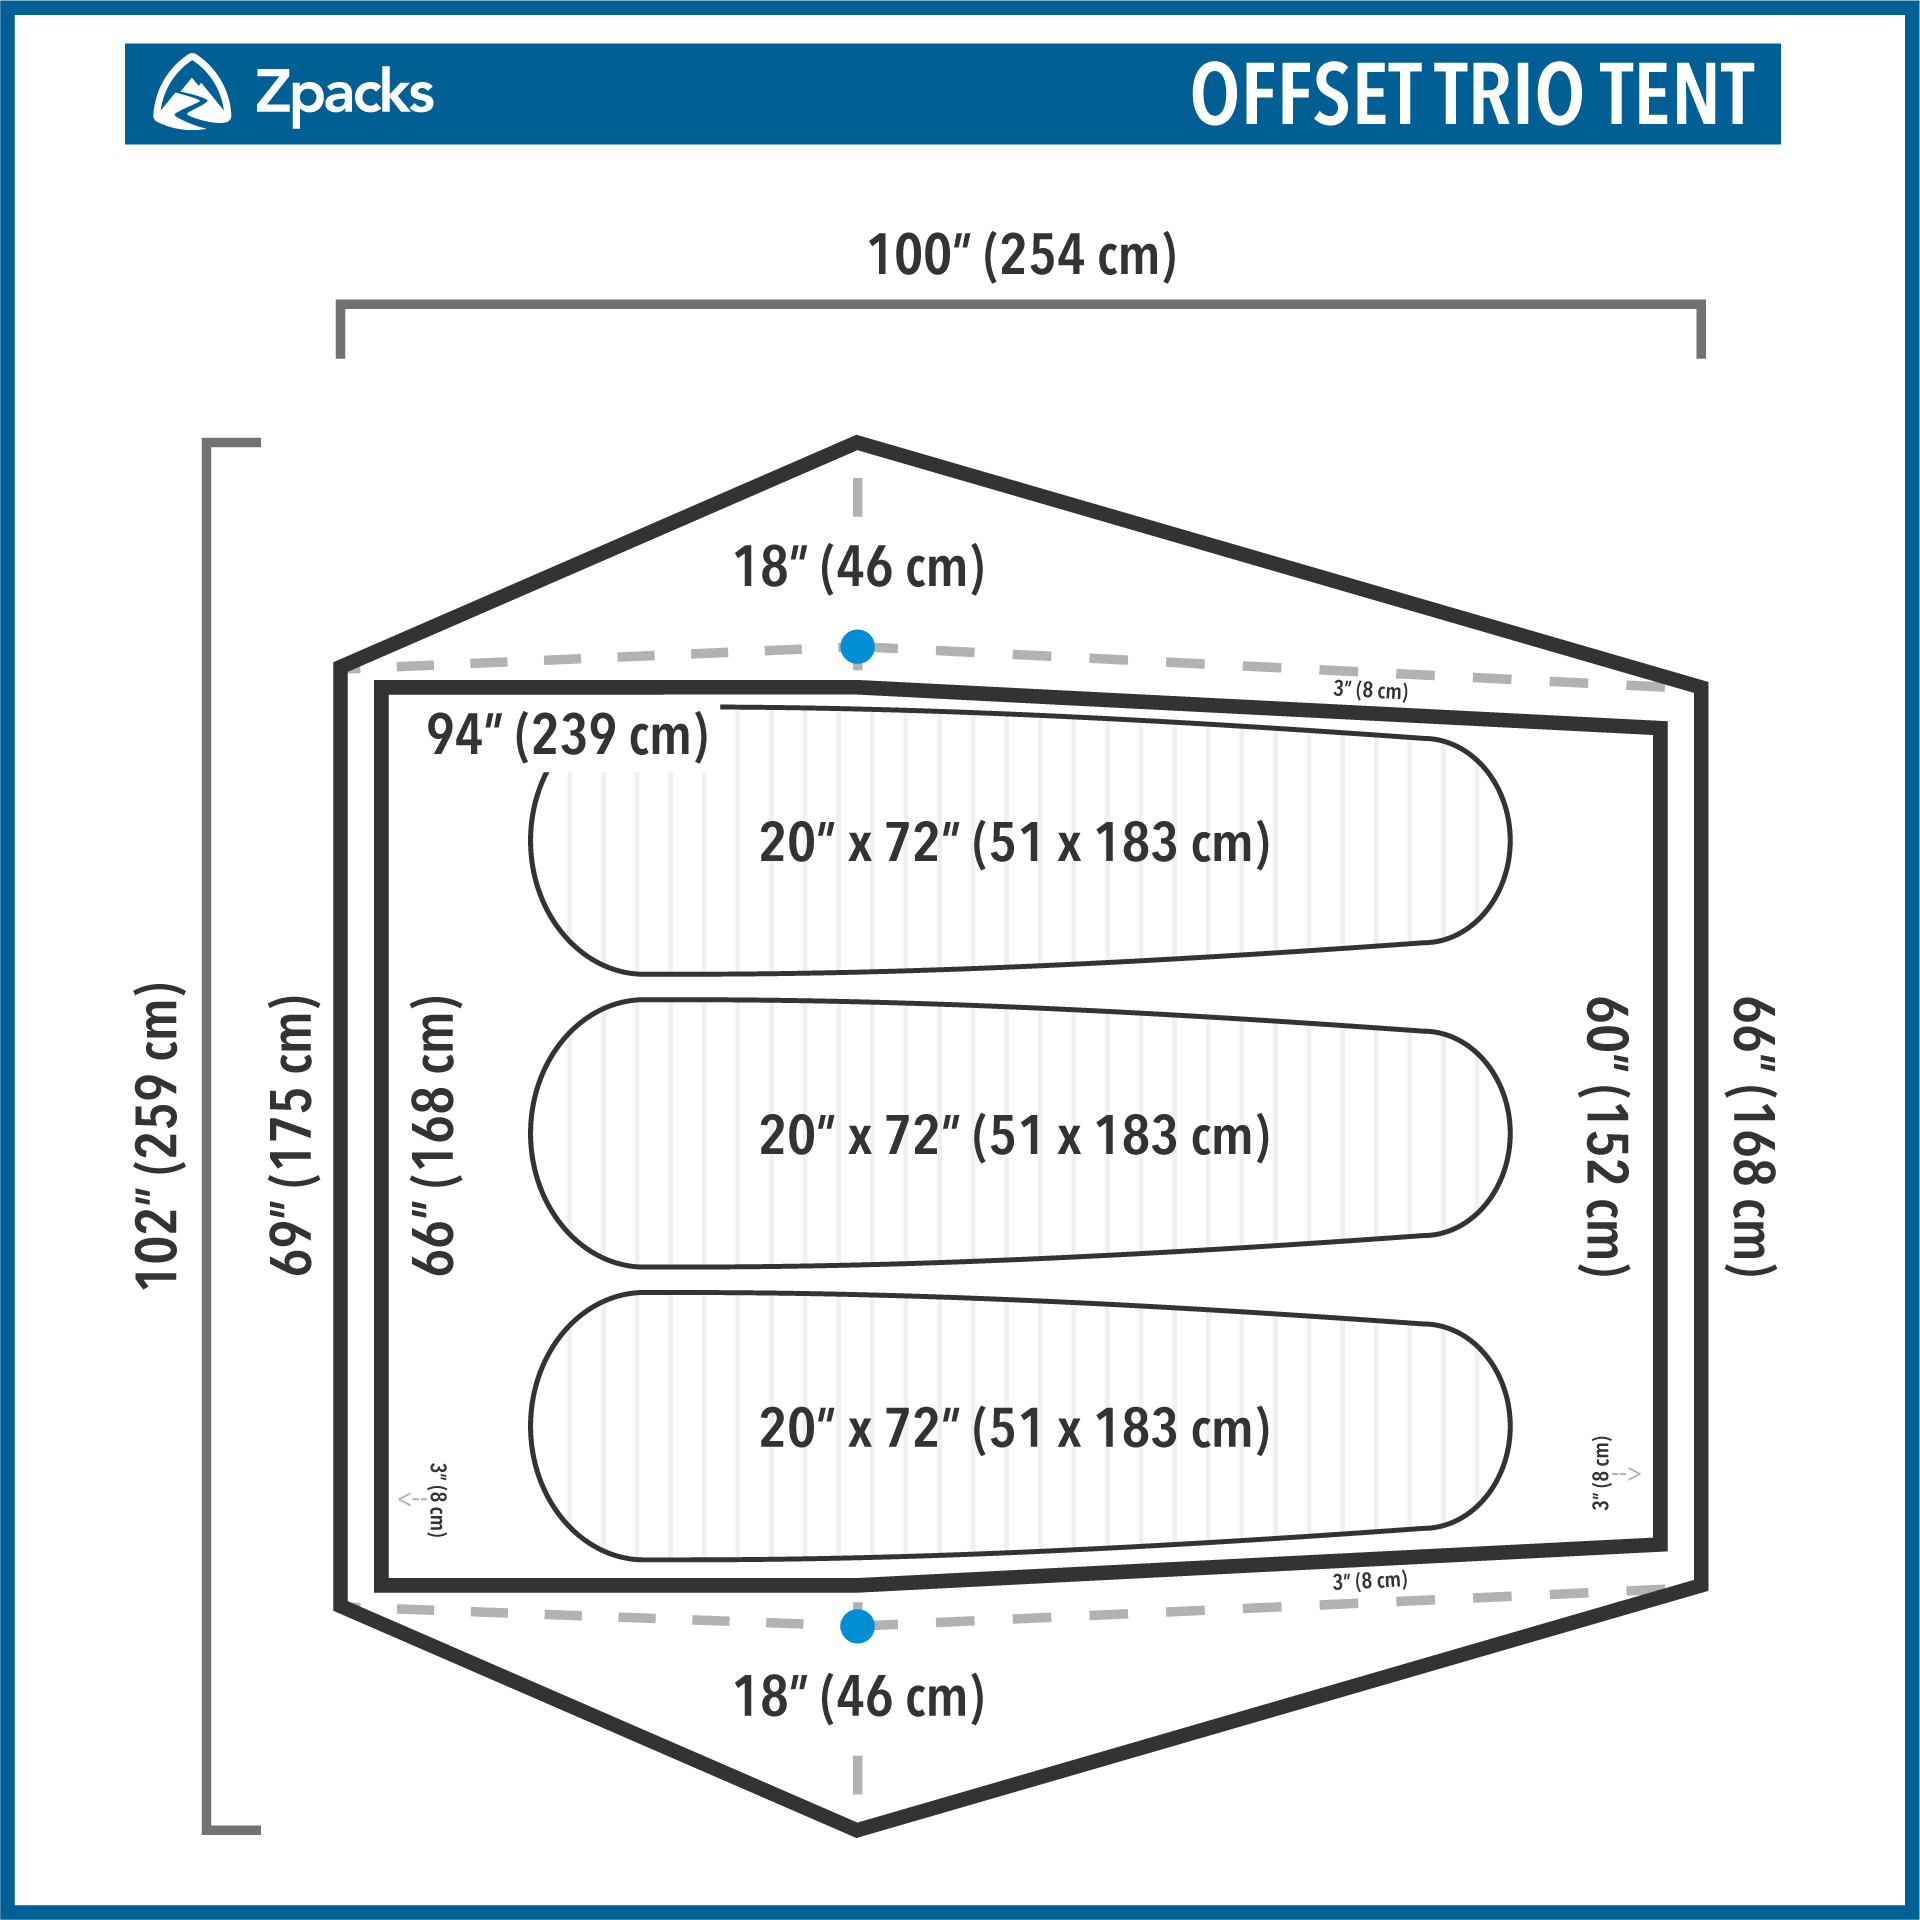 Offset Trio Tent – Zpacks